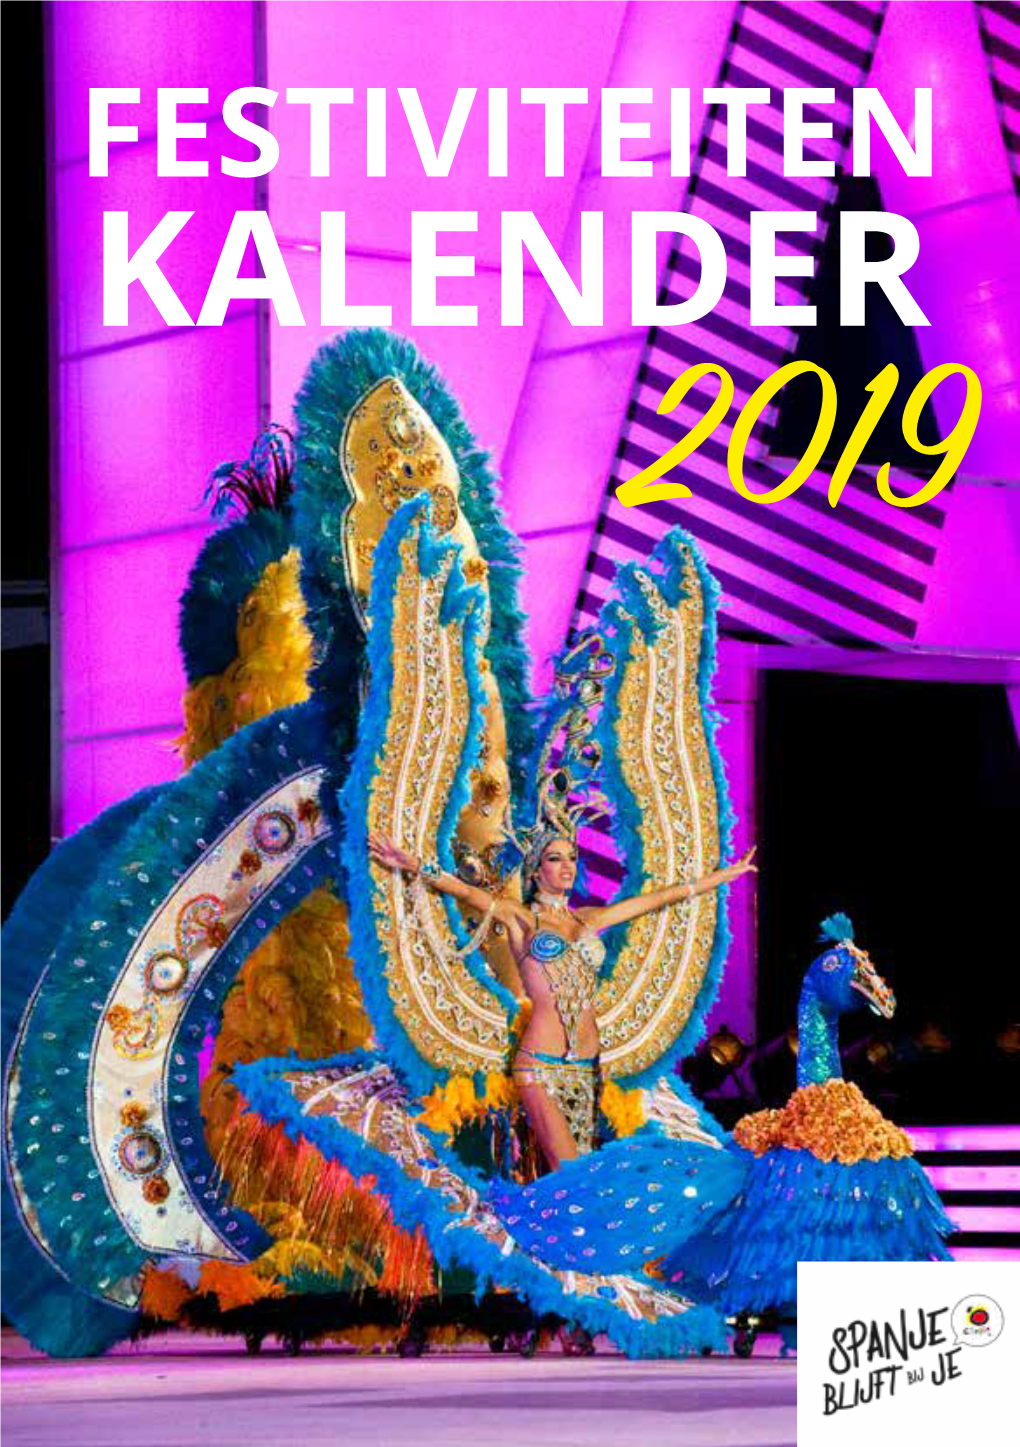 FESTIVITEITEN KALENDER 2019 Calendario De Fiestas 2019 / Festiviteitenkalender 2019